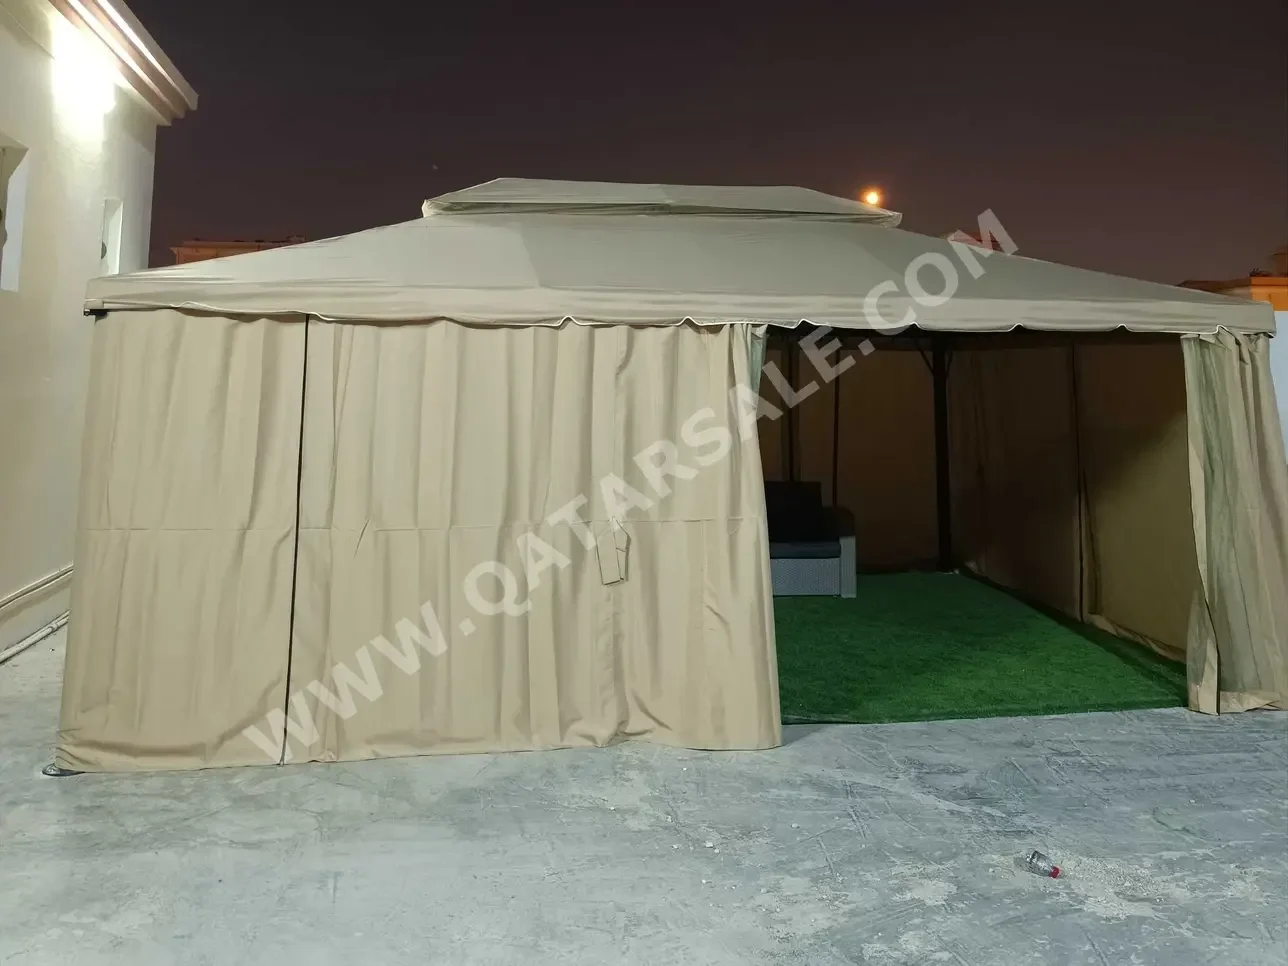 Camping Tent 7 Person  Bestway  Gray  China  2024  6 CM  4 CM  2.5 CM  Autumn/Winter  4  Warranty  Waterproof